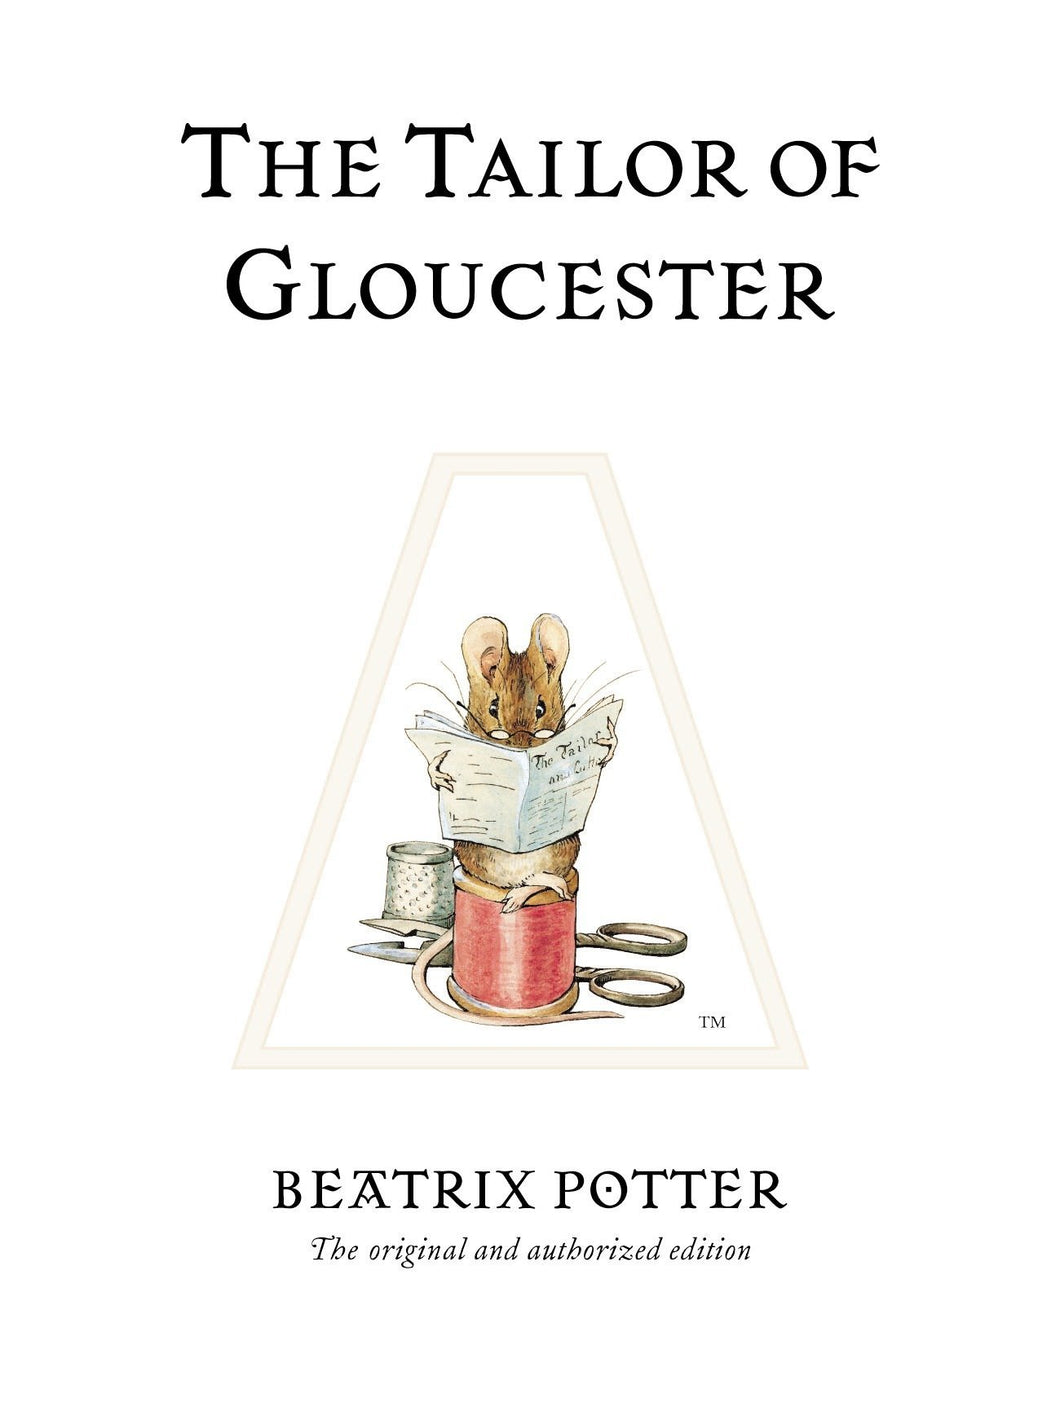 The Tailor of Gloucester (Beatrix Potter Originals) [Hardcover] Potter, Beatrix